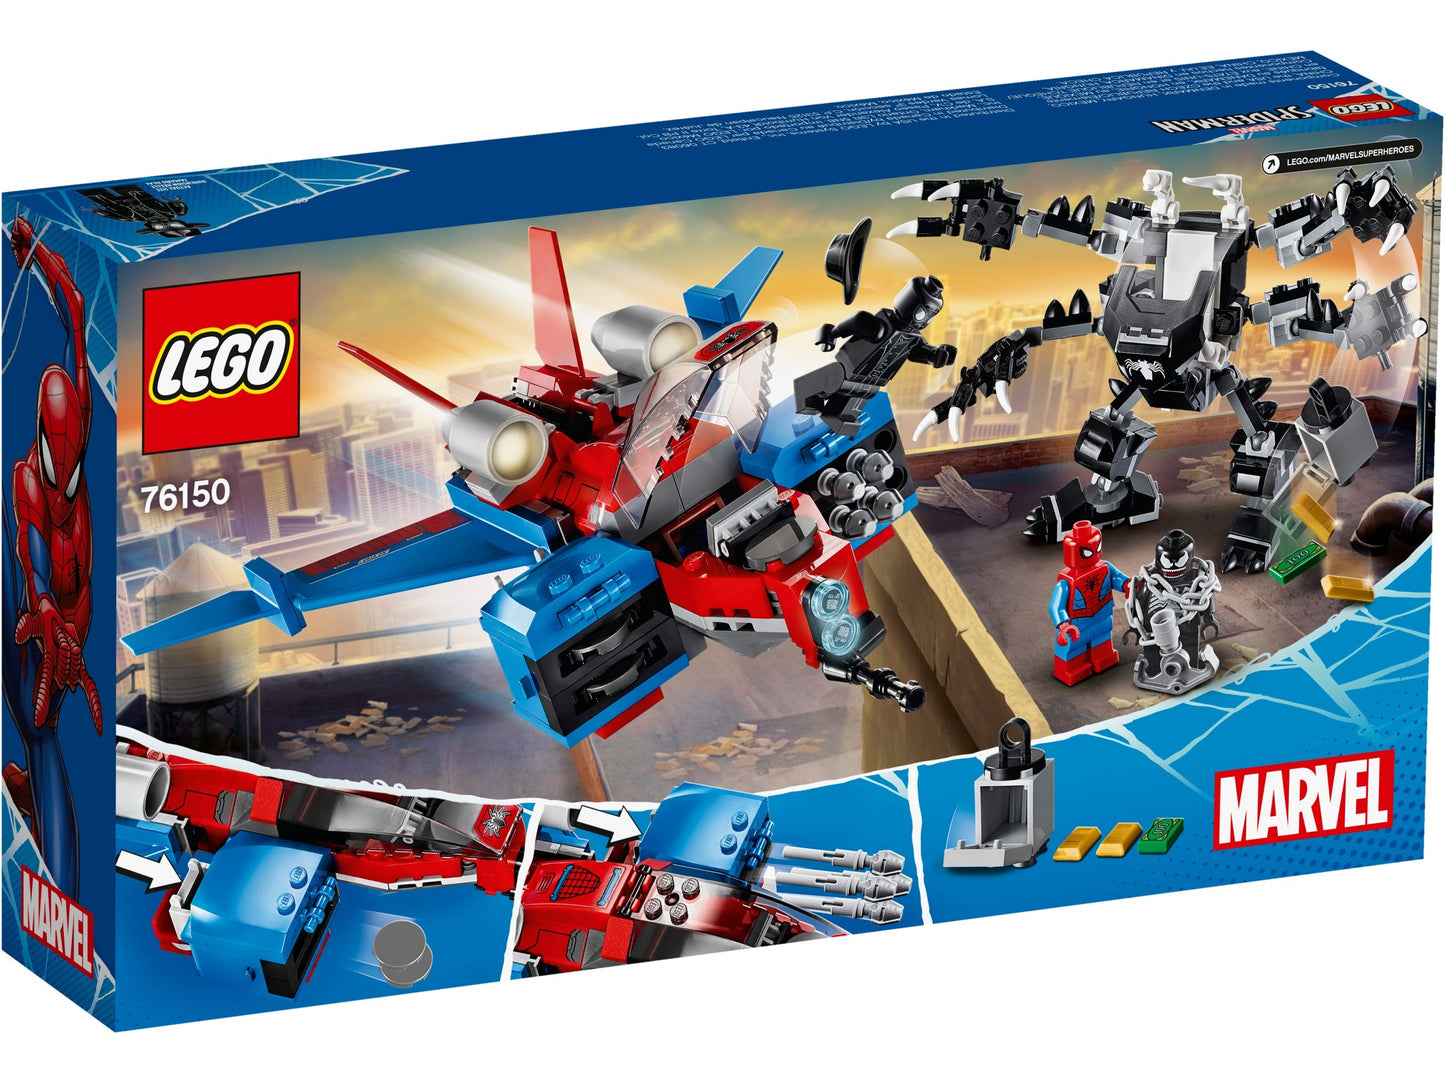 Lego Marvel Spiderman Spiderjet vs Venom Mech 76150